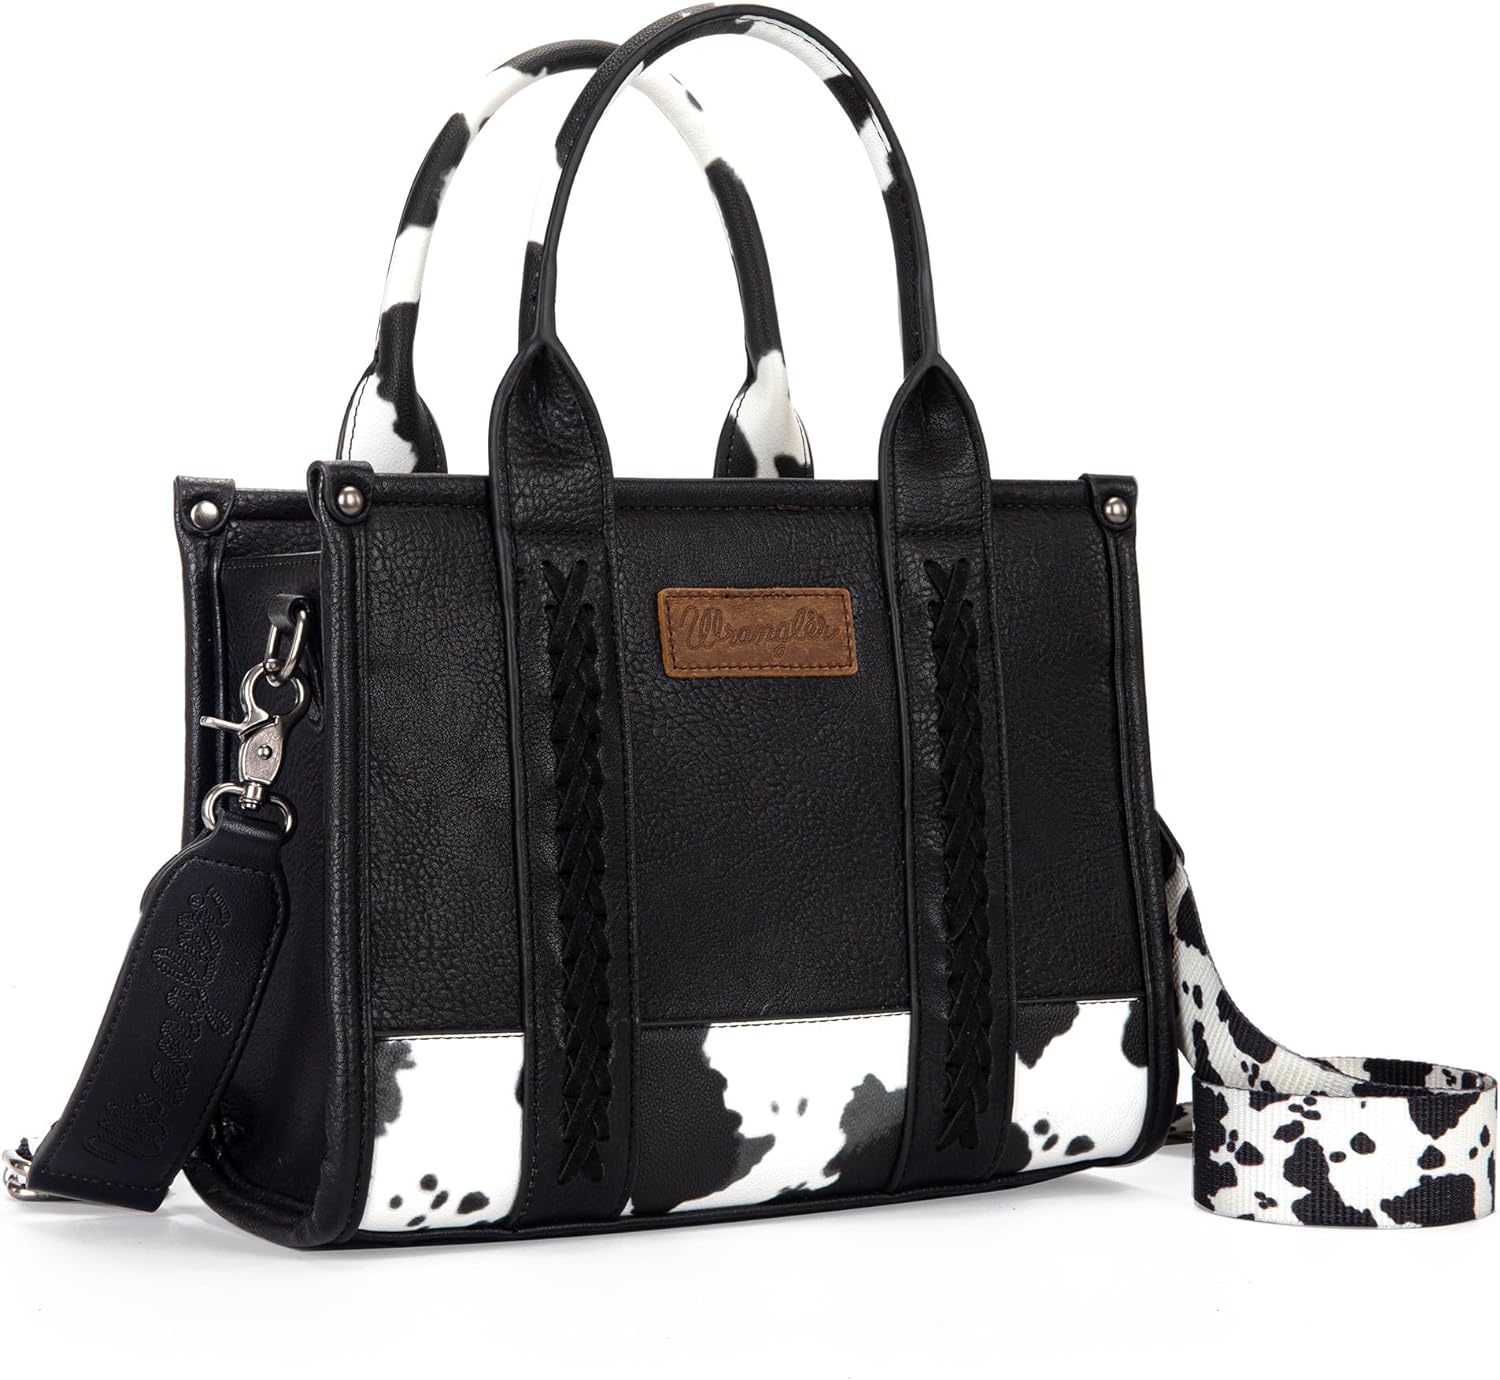 Wrangler Tote Handbag for Women Cow Print Purse Top Handle Handbags